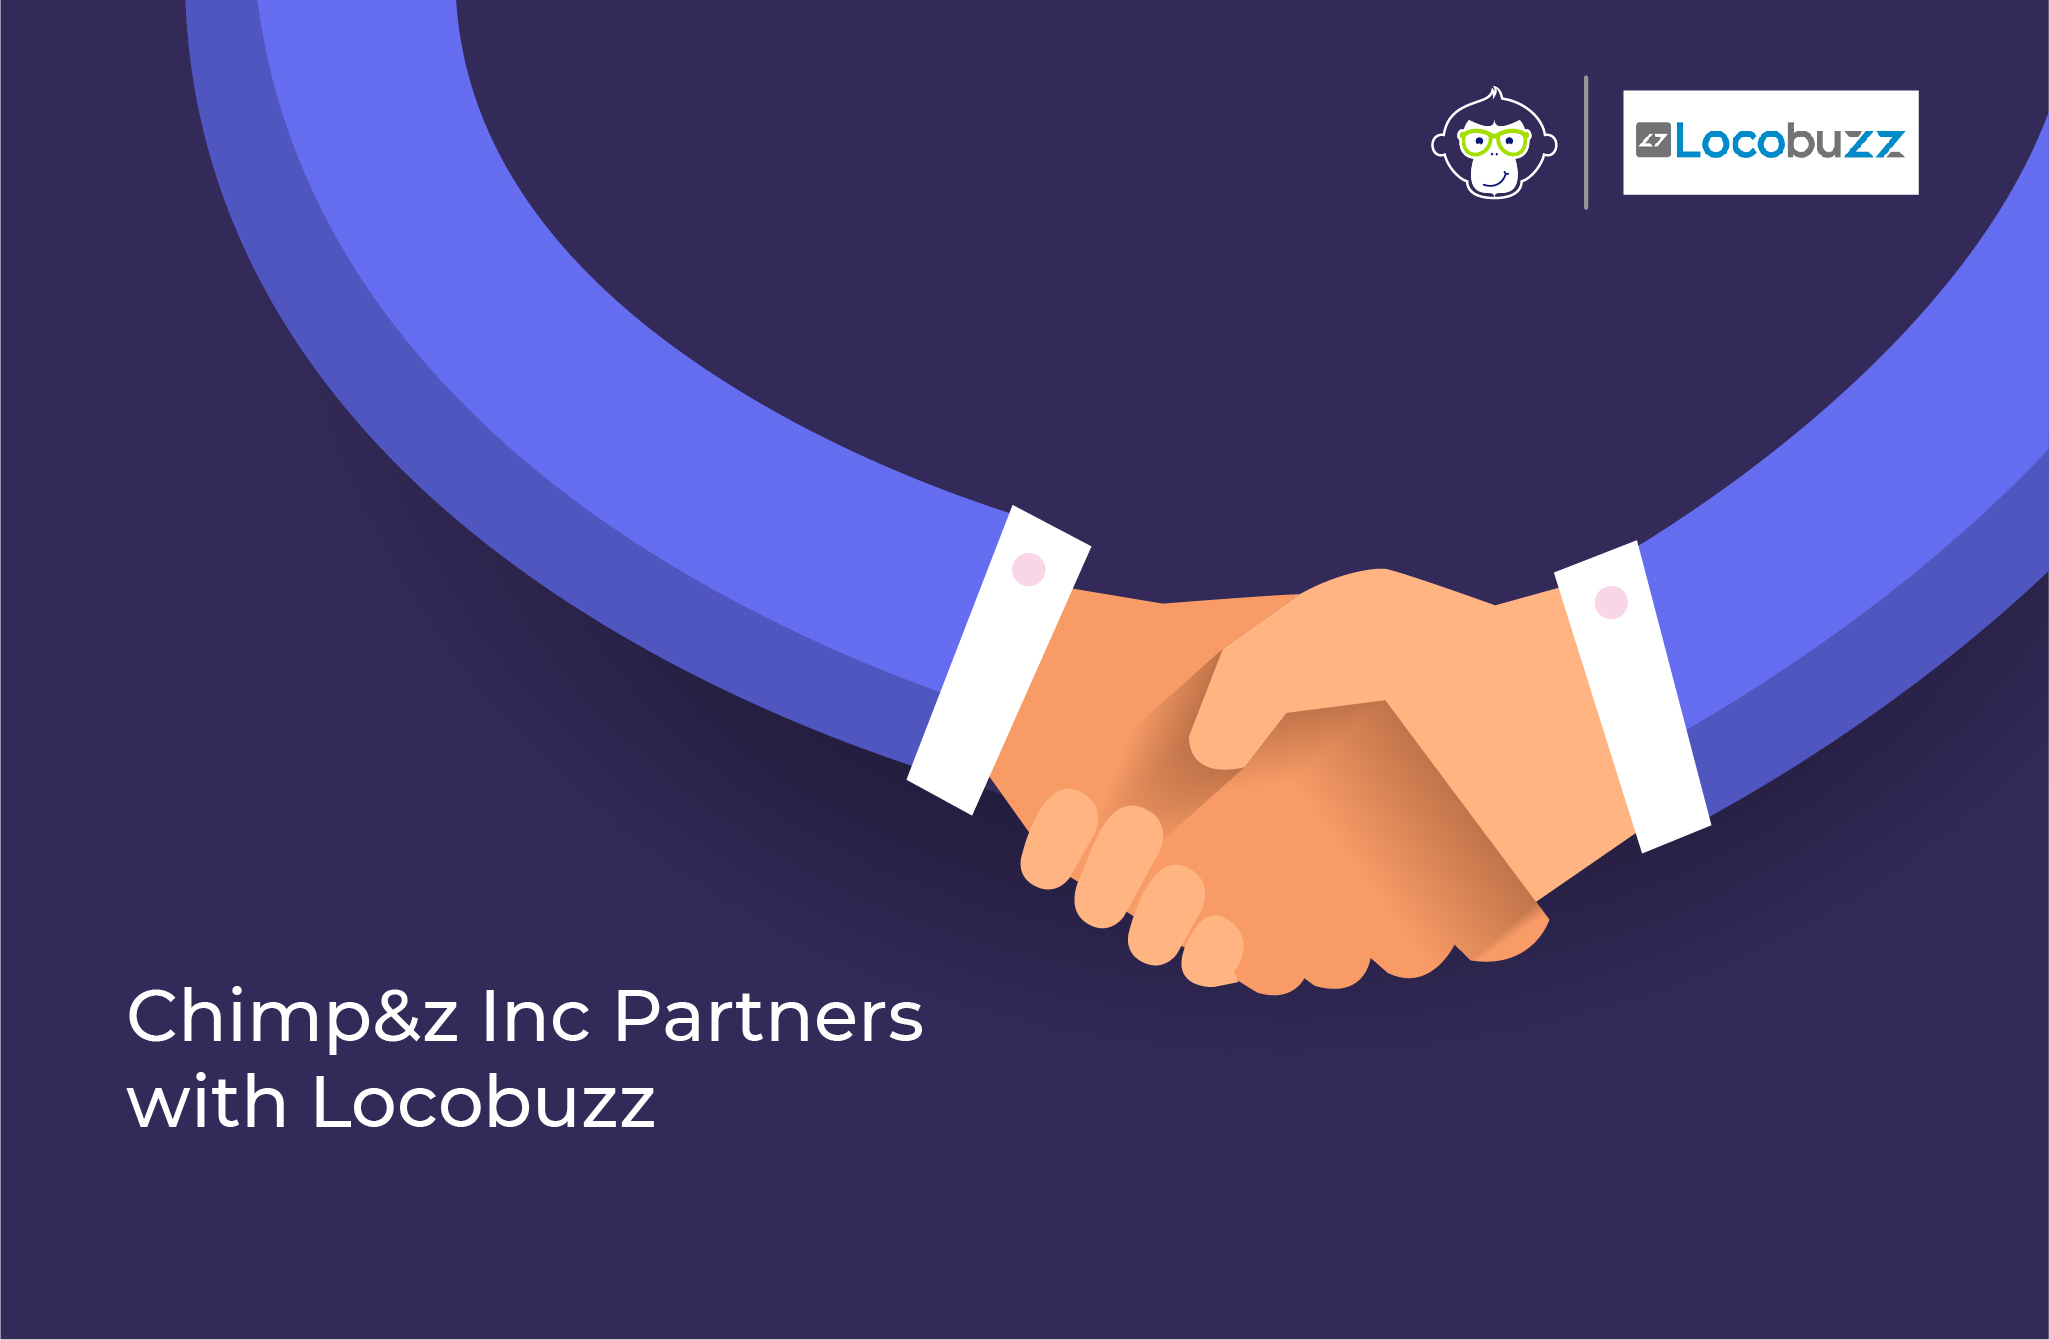 Blog- Chimp&z Inc Partners with Locobuzz